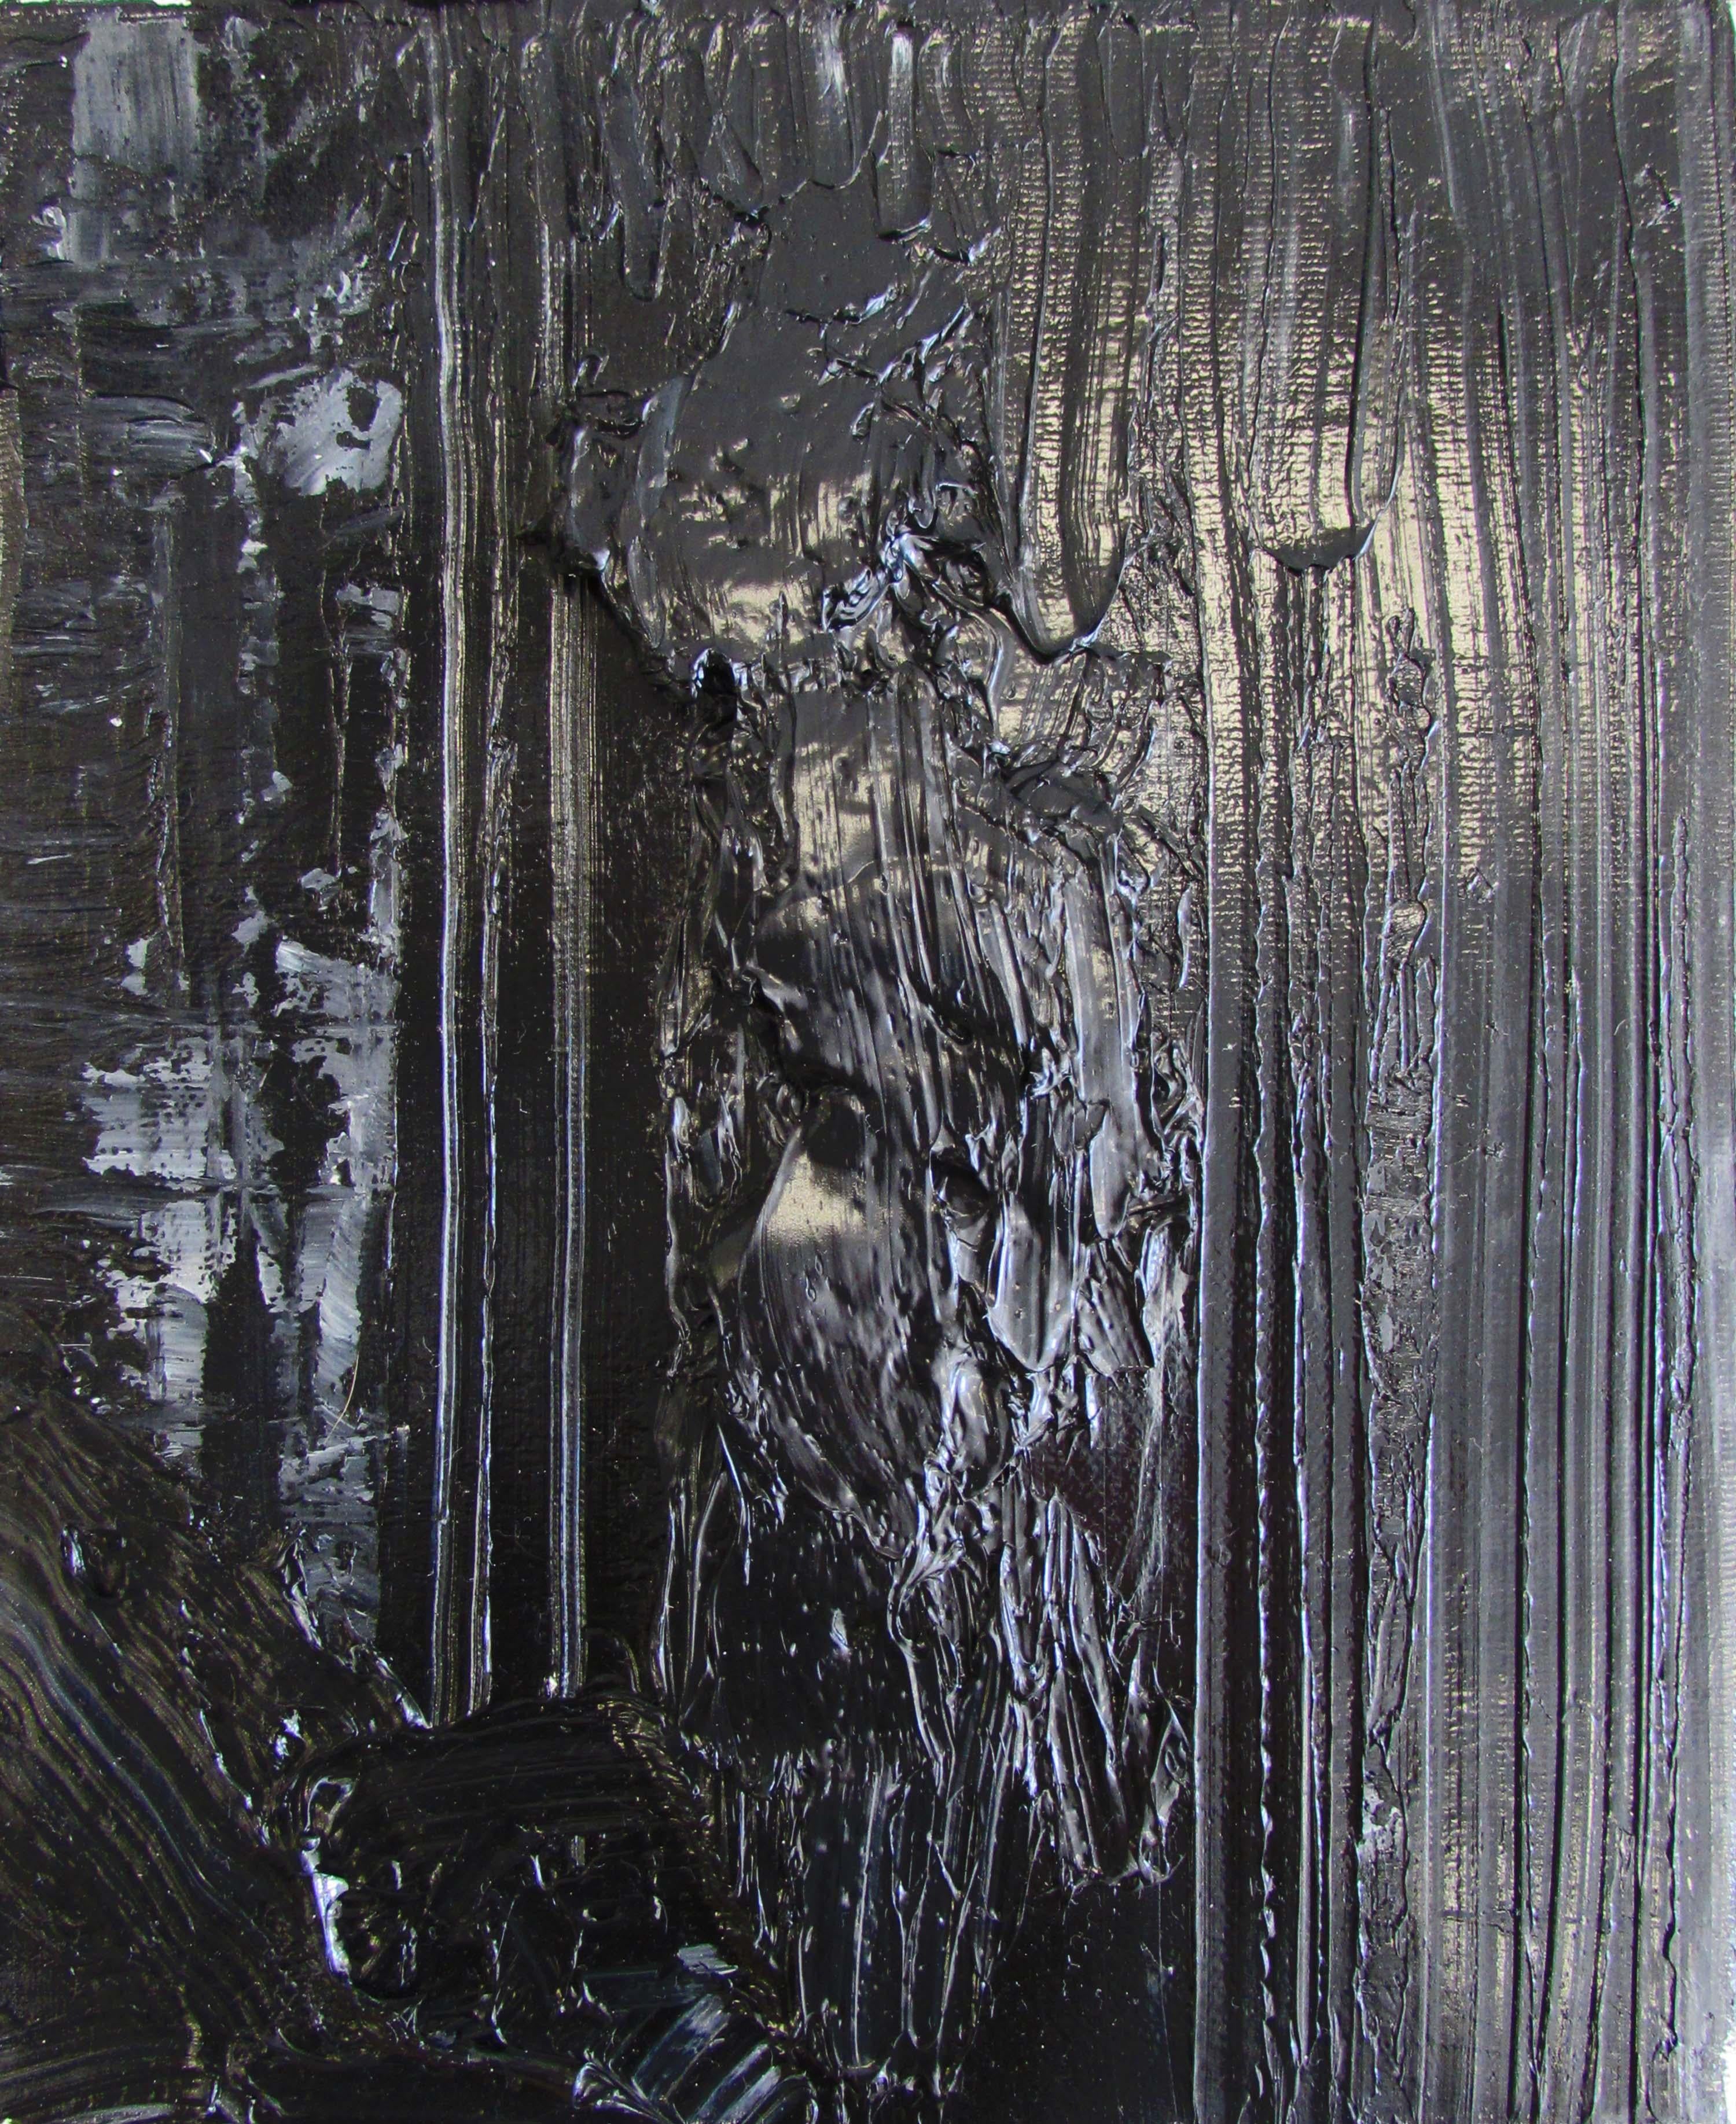 Abstract Painting Zsolt Berszán - Sans titre 03 [Dissecting the Inknown 03] - Contemporain, Noir, Monochrome